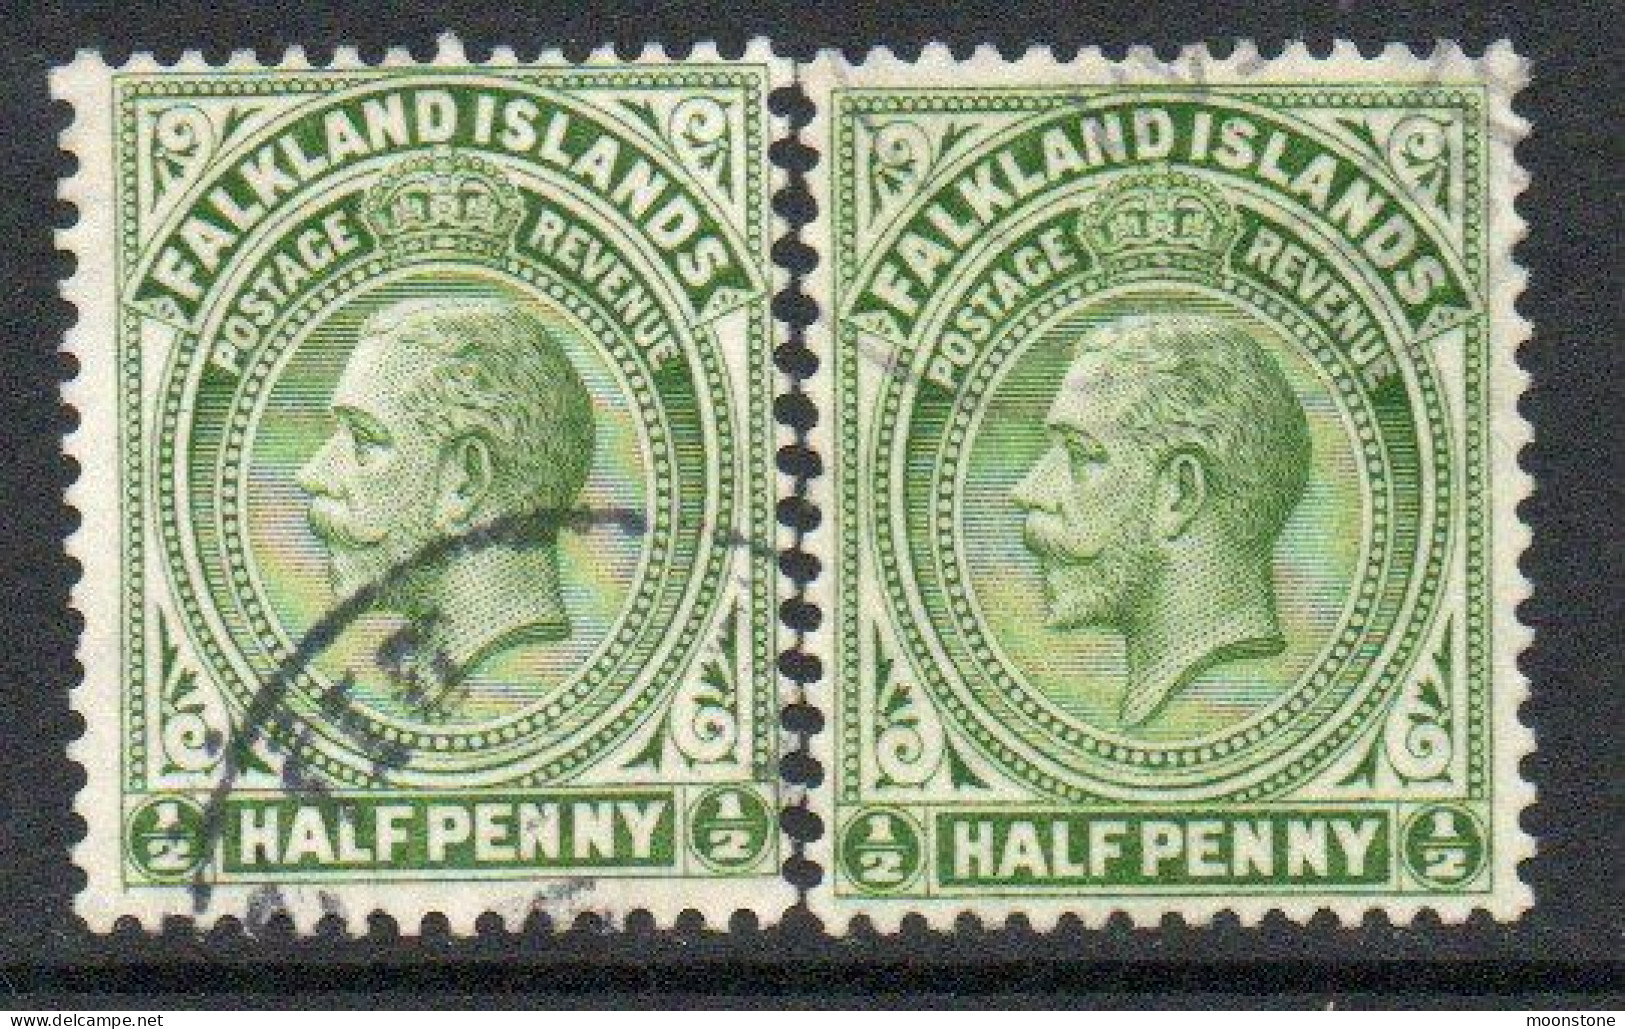 Falkland Islands GV 1912-20 ½d Yellow-green Definitive, Comb Perf, Wmk. Multiple Crown CA, 2x Shades, Used, SG 60 - Falklandinseln